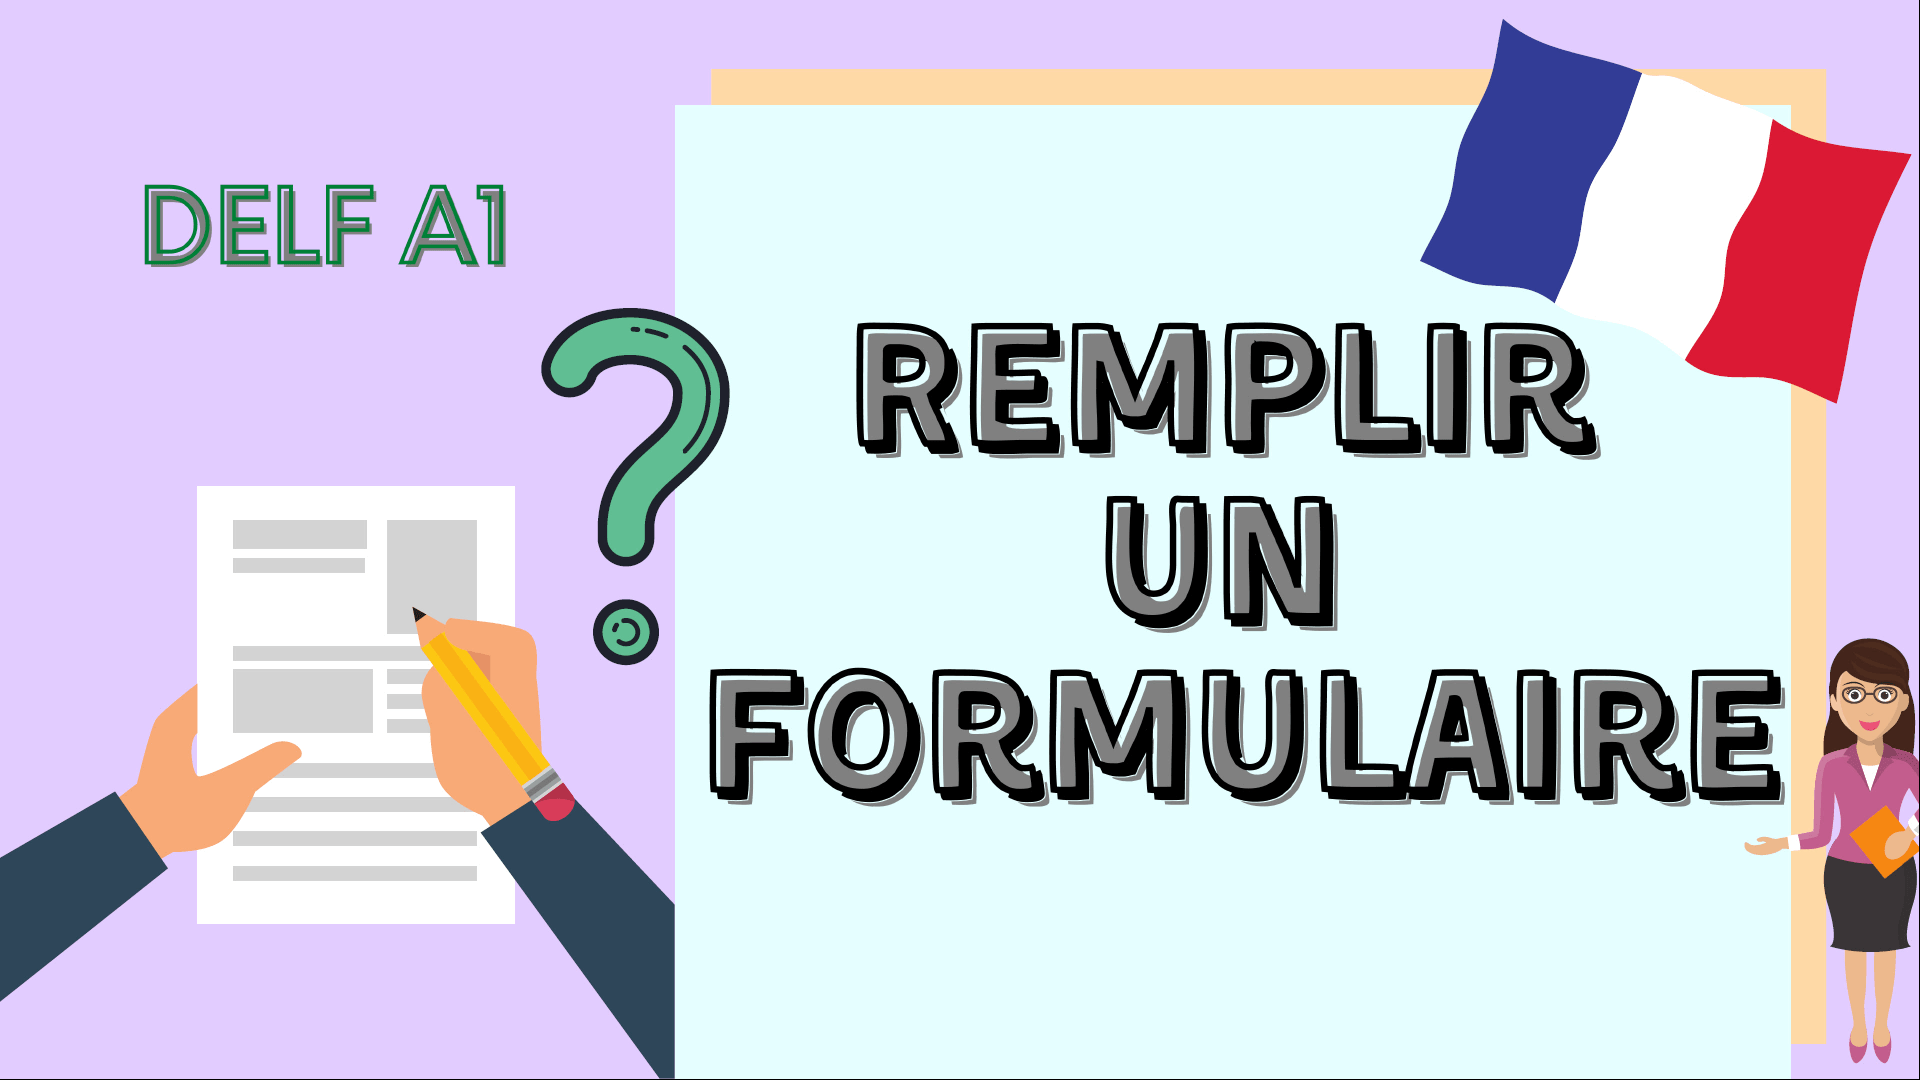 Remplir un formulaire DELF A1 - Fill in a form DELF A1 practice